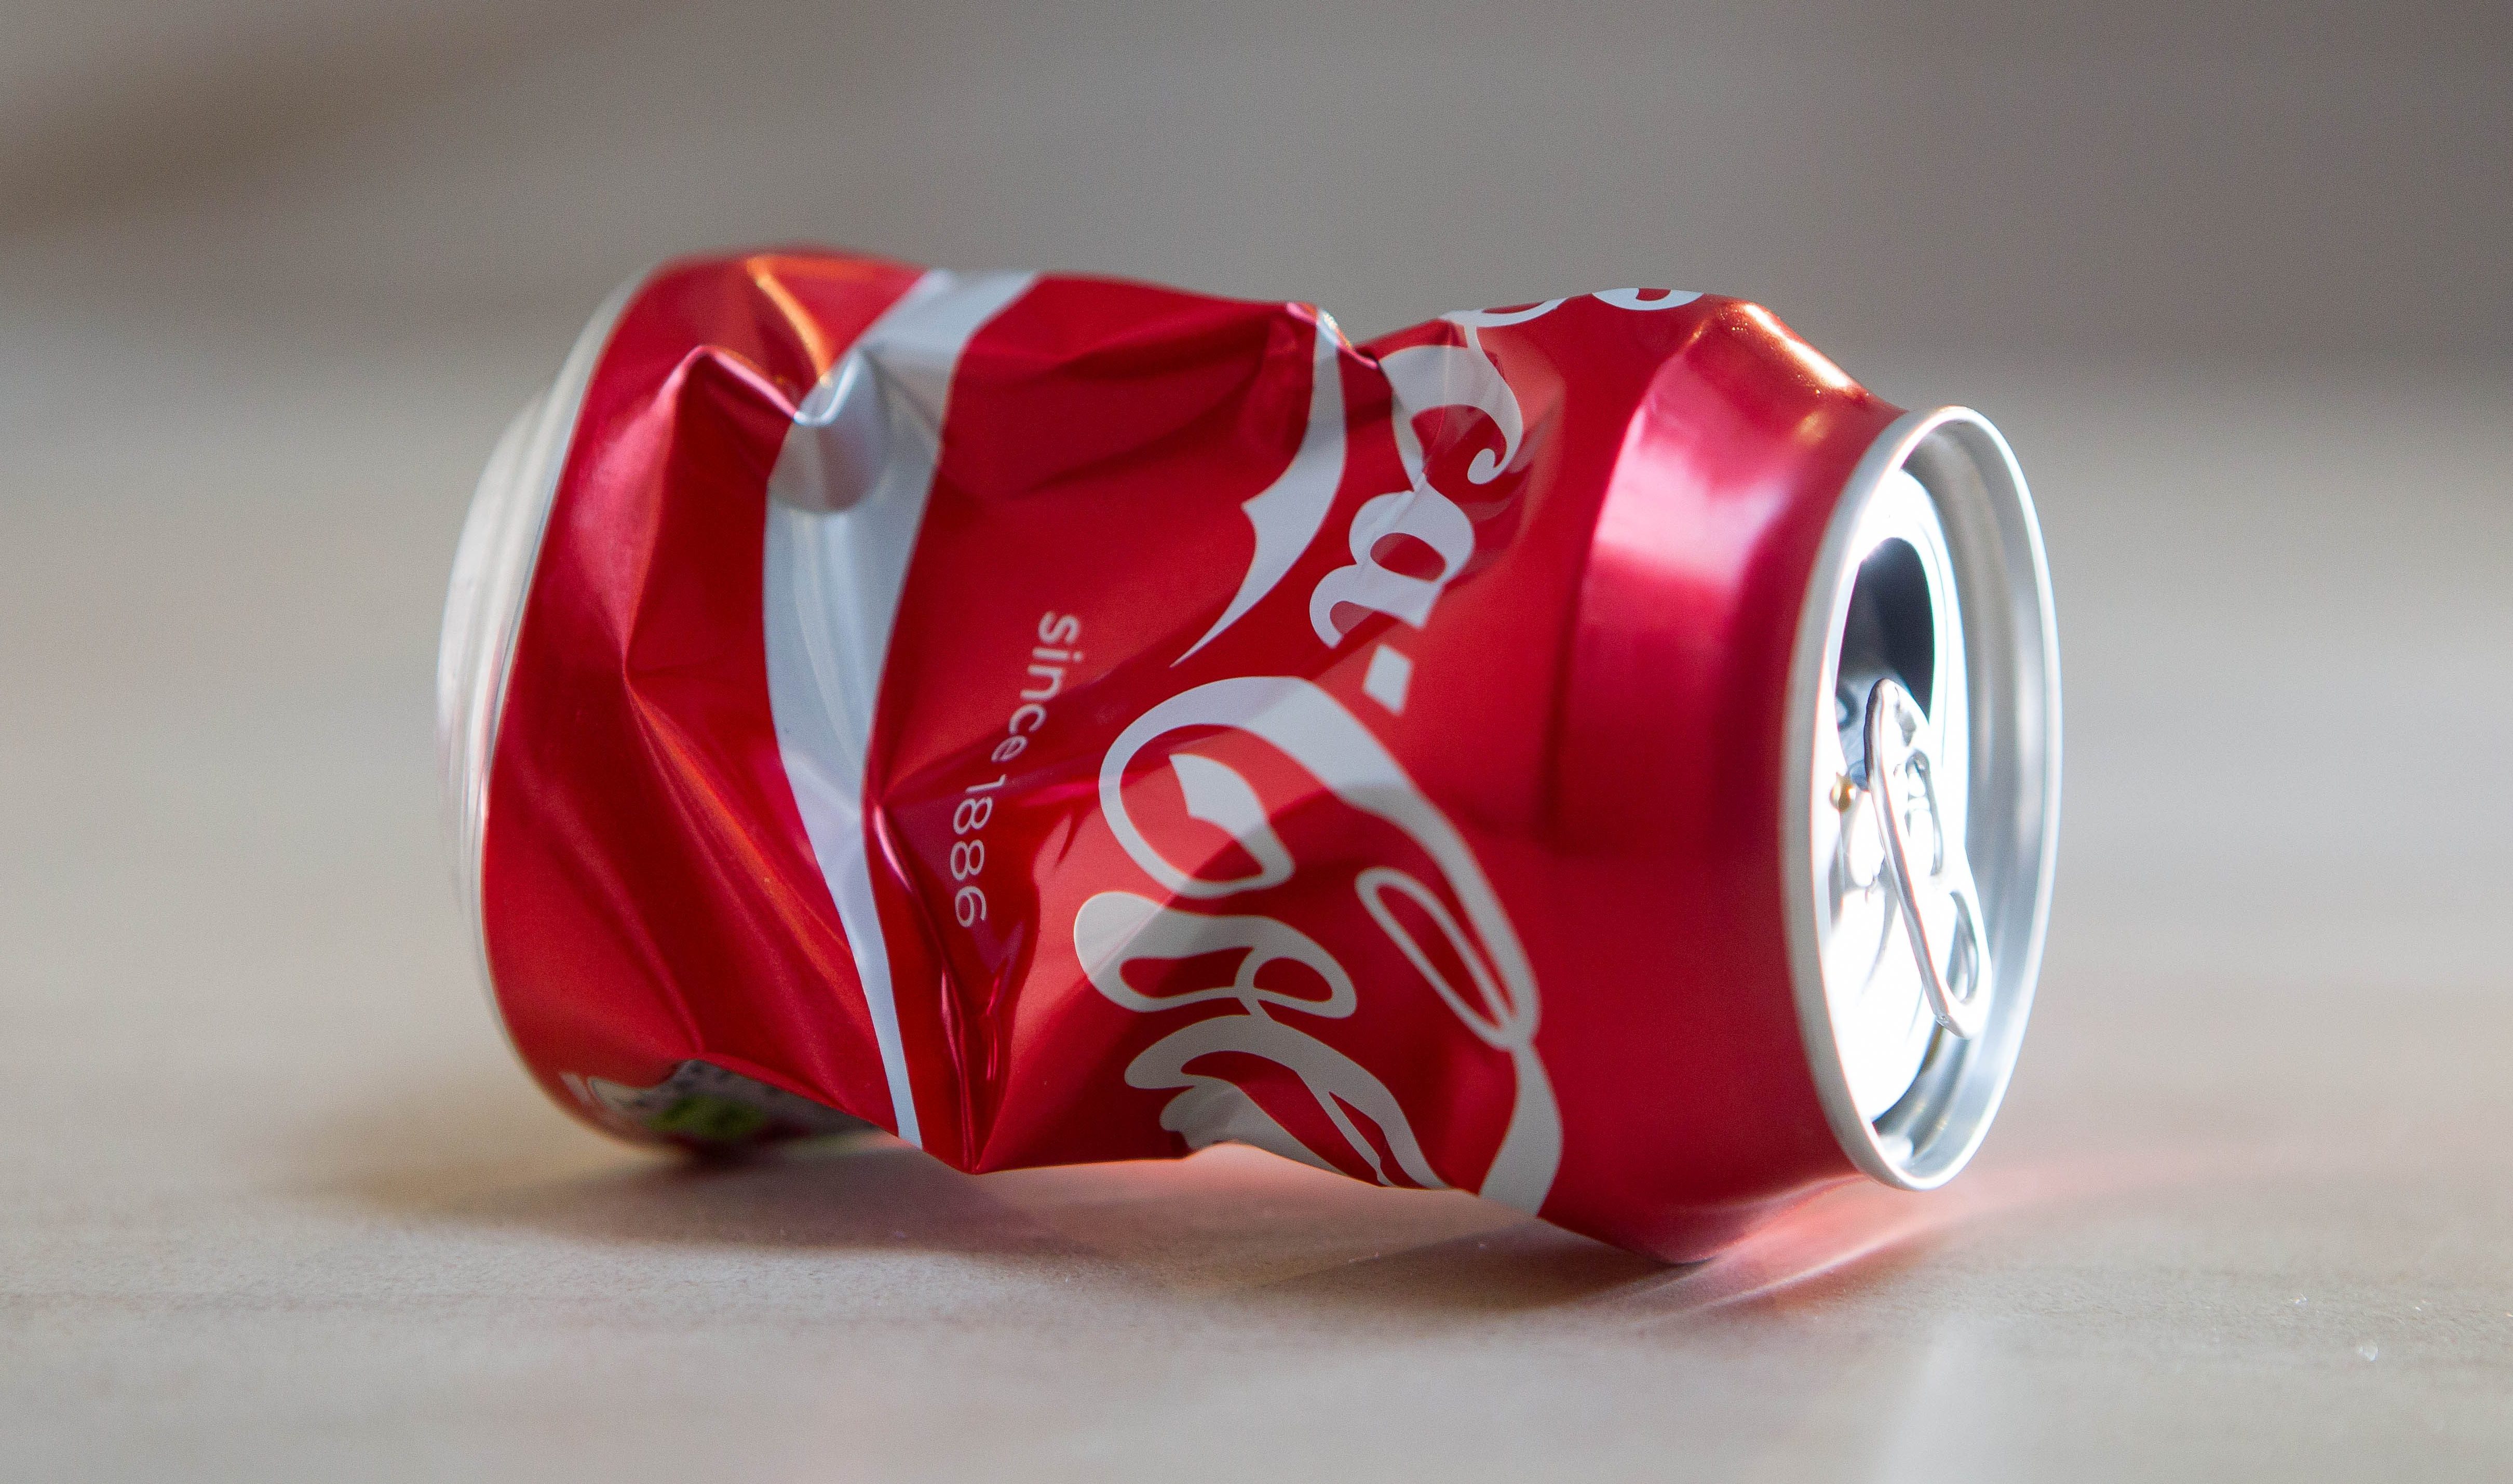 Coca-Cola launch new sugar-free drink following sugar tax